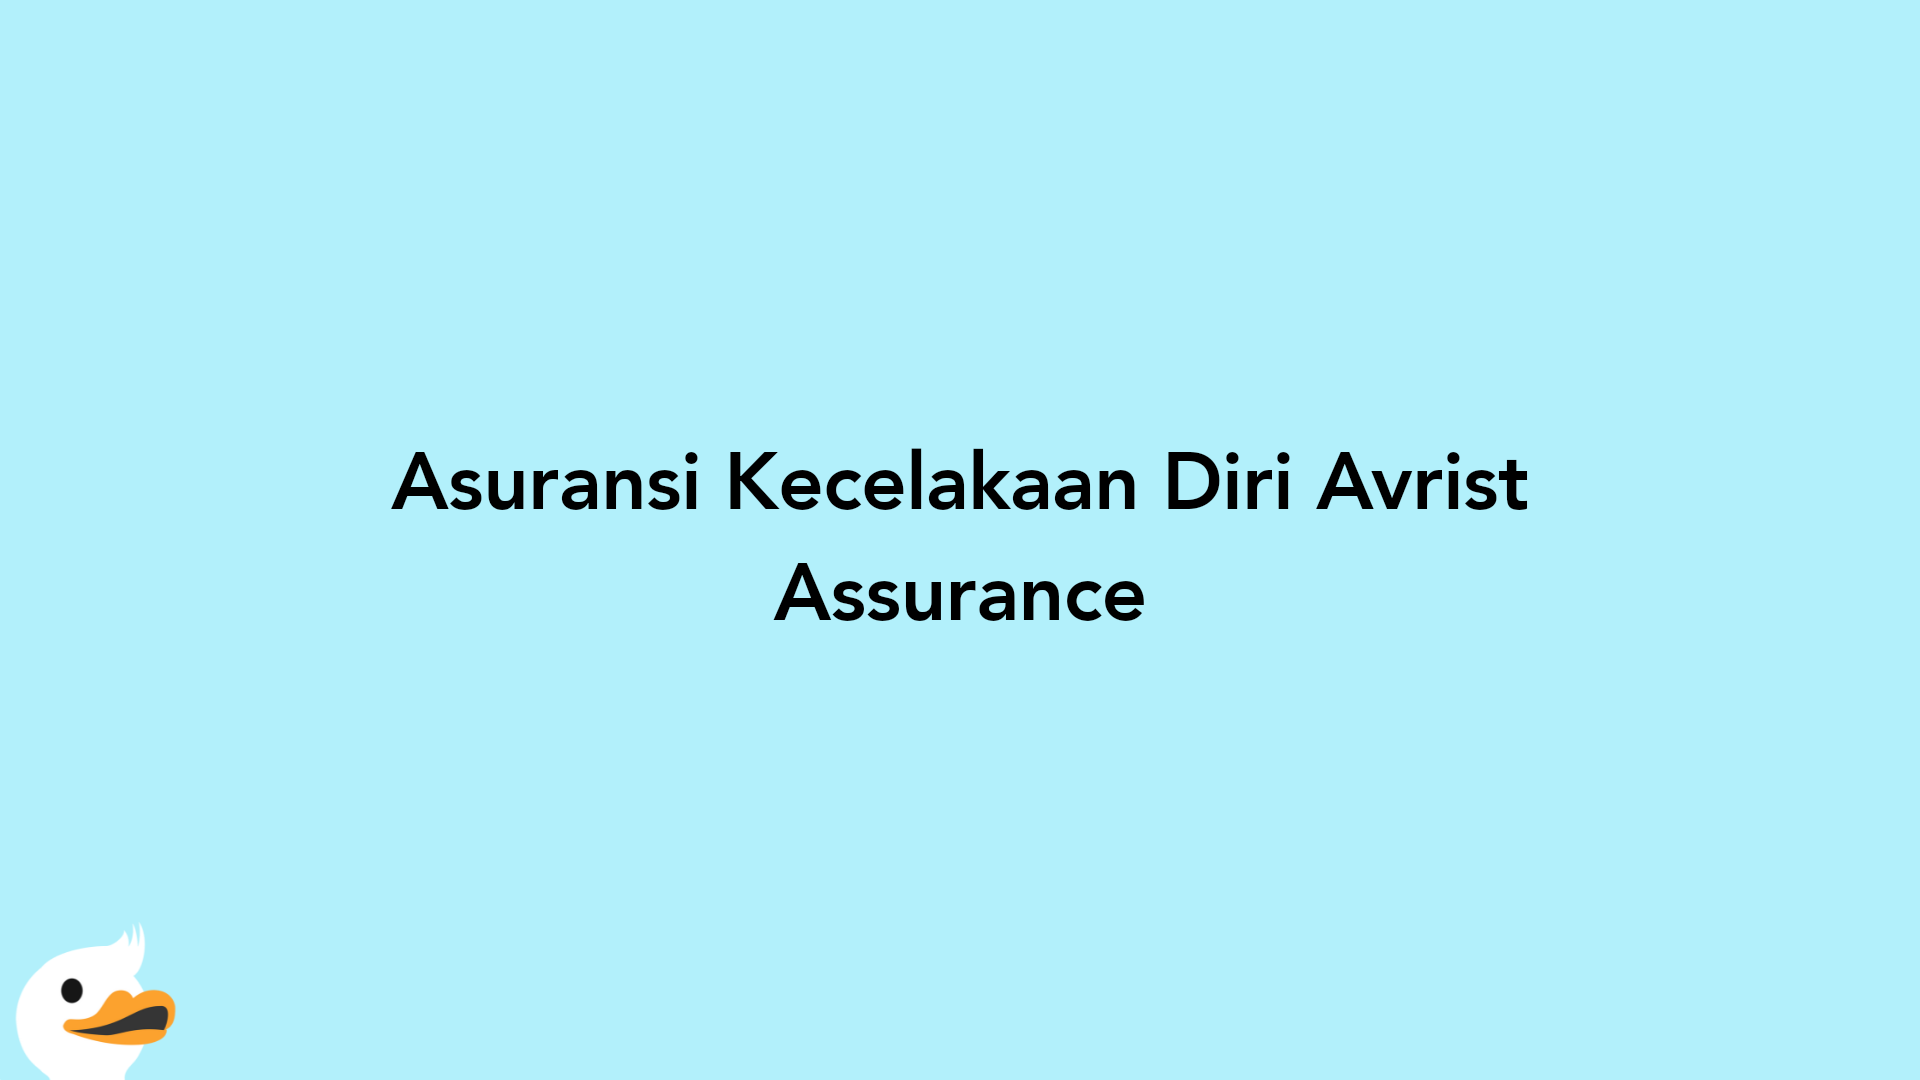 Asuransi Kecelakaan Diri Avrist Assurance